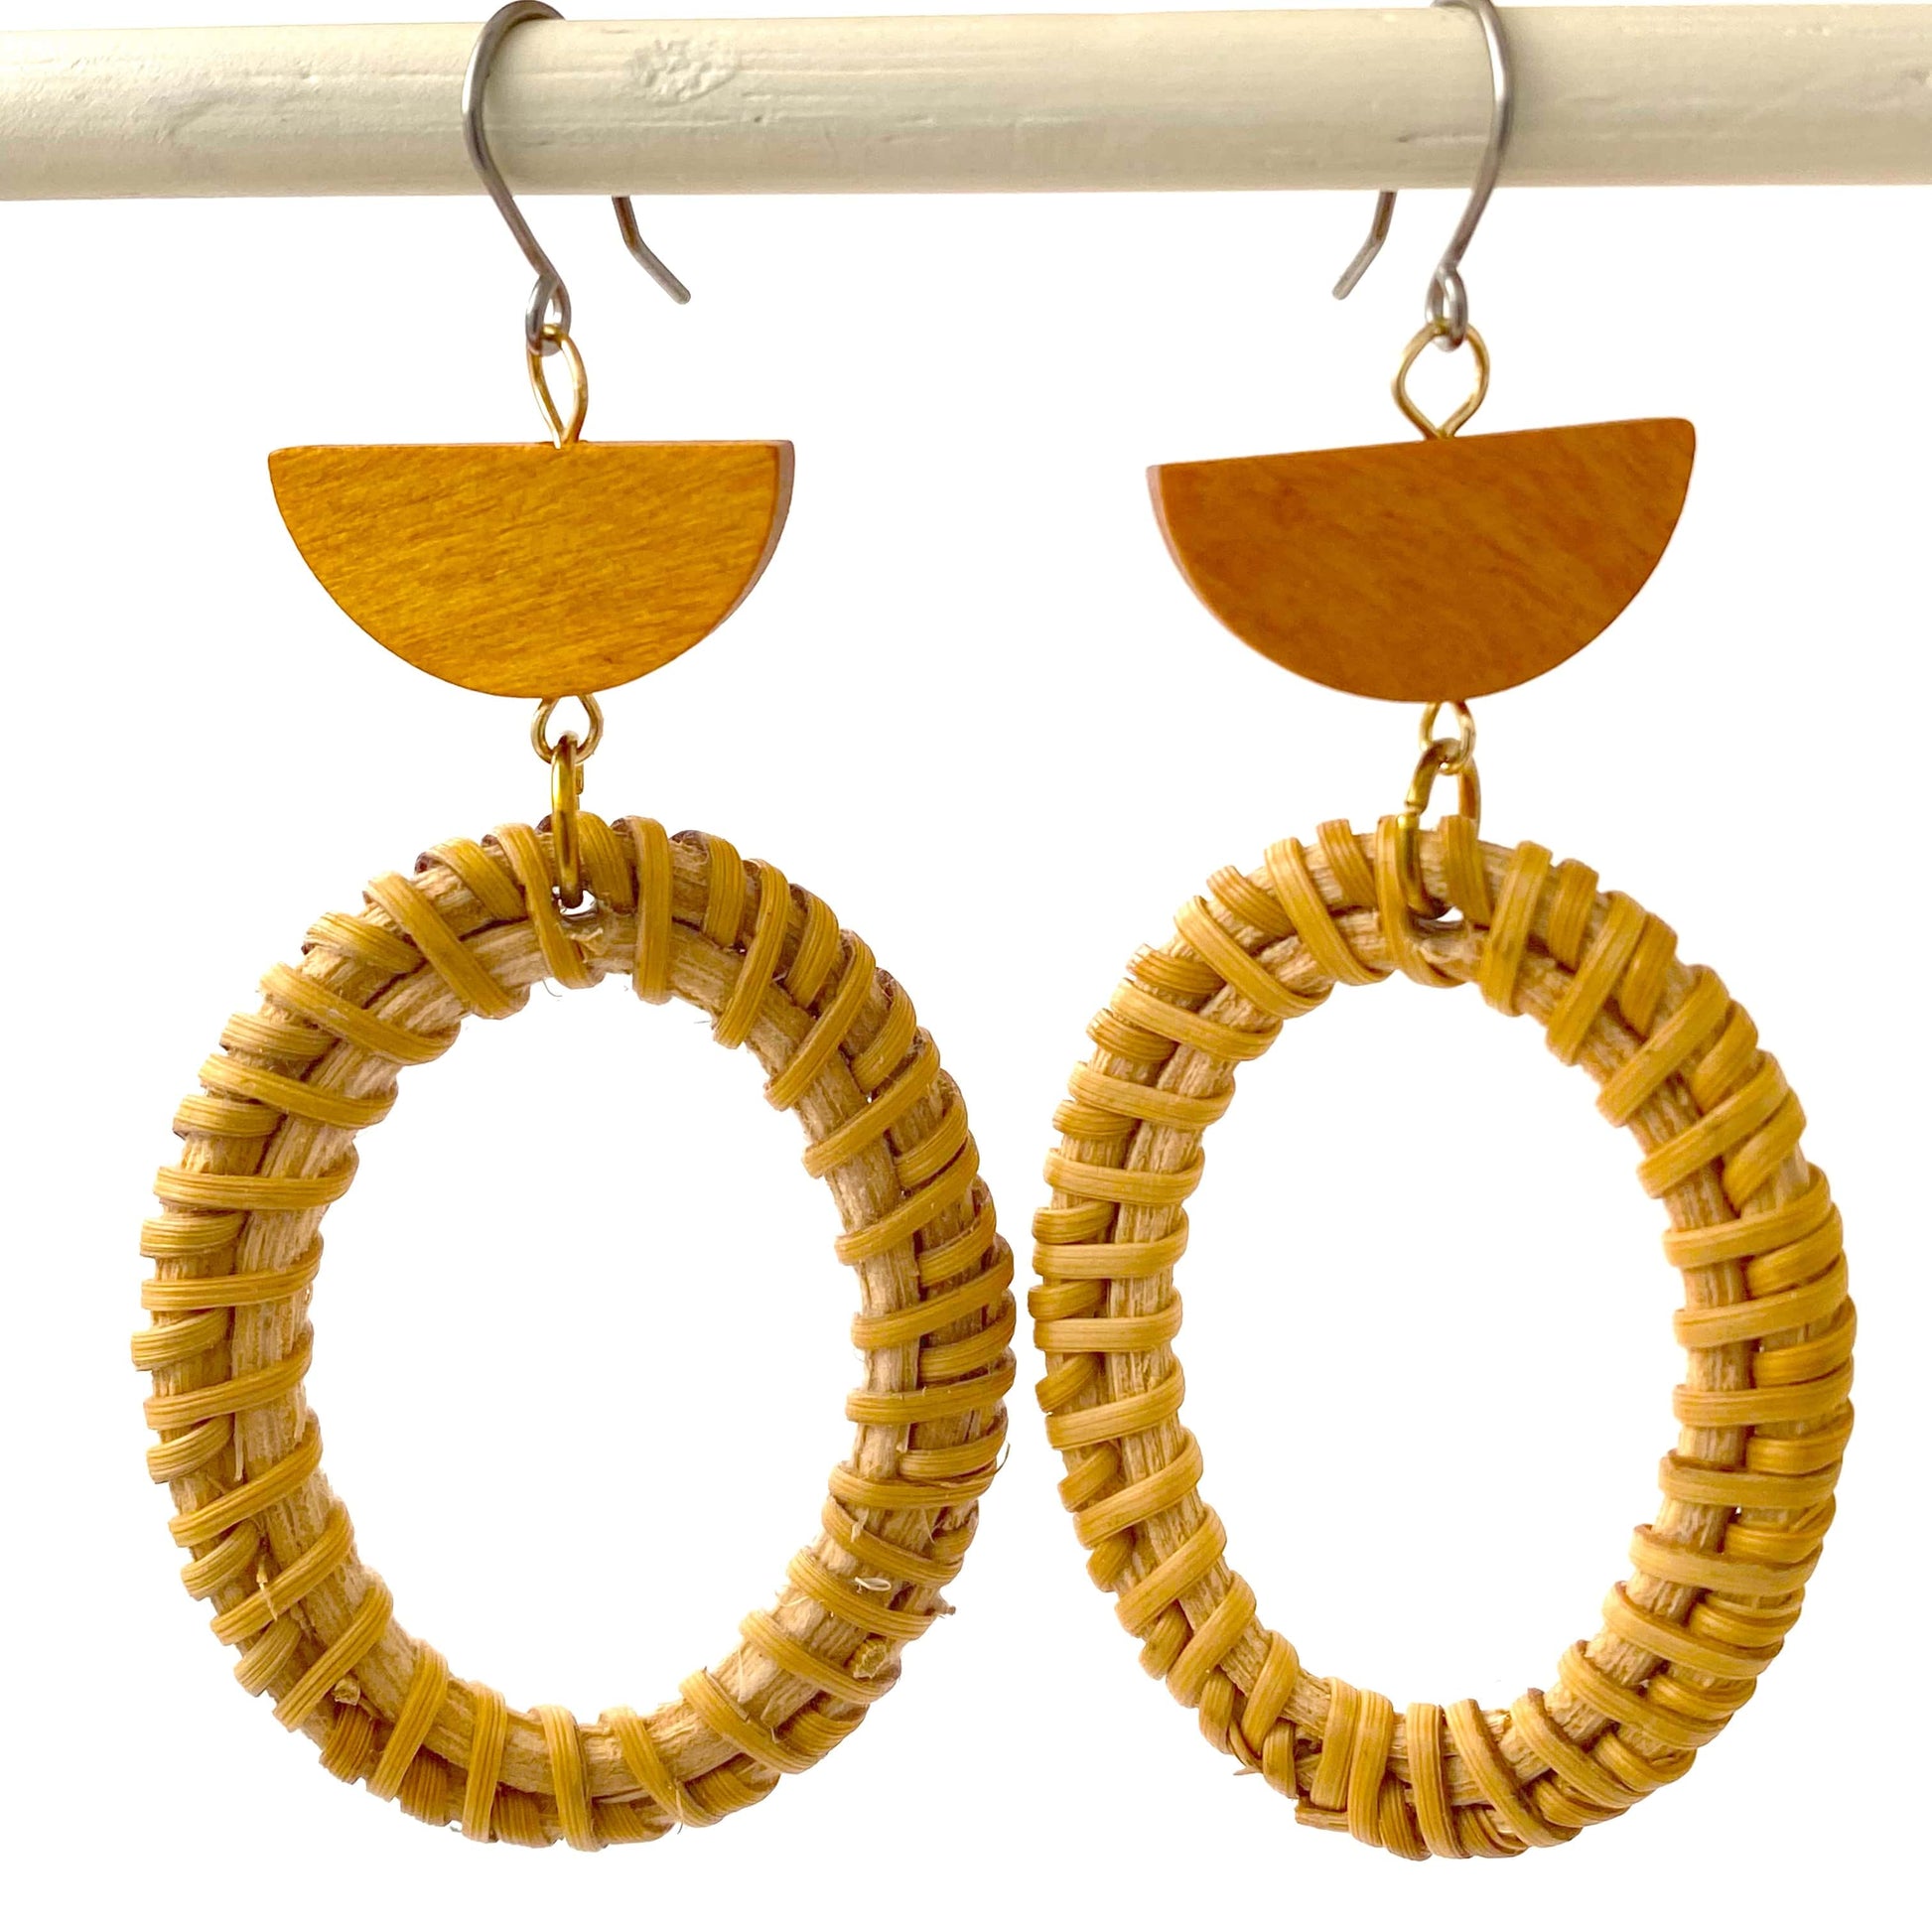 Bohemia style wicker and wood geometric earrings with titanium hook